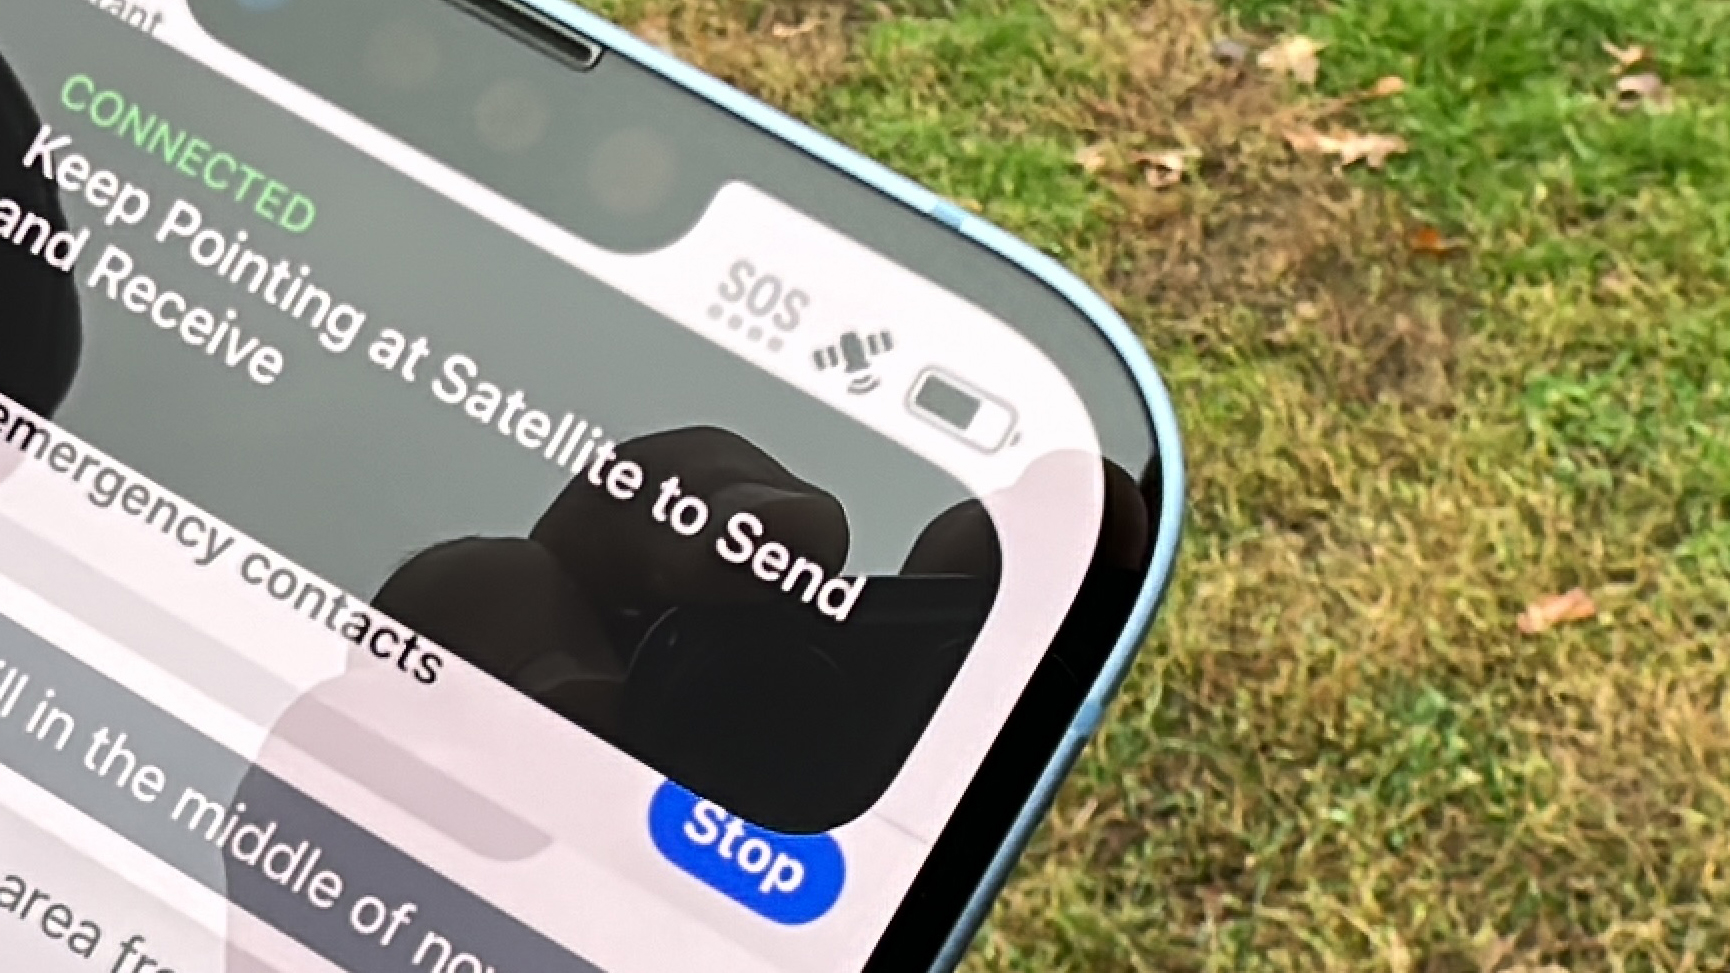 Apple Emergency SOS via Satellite icons